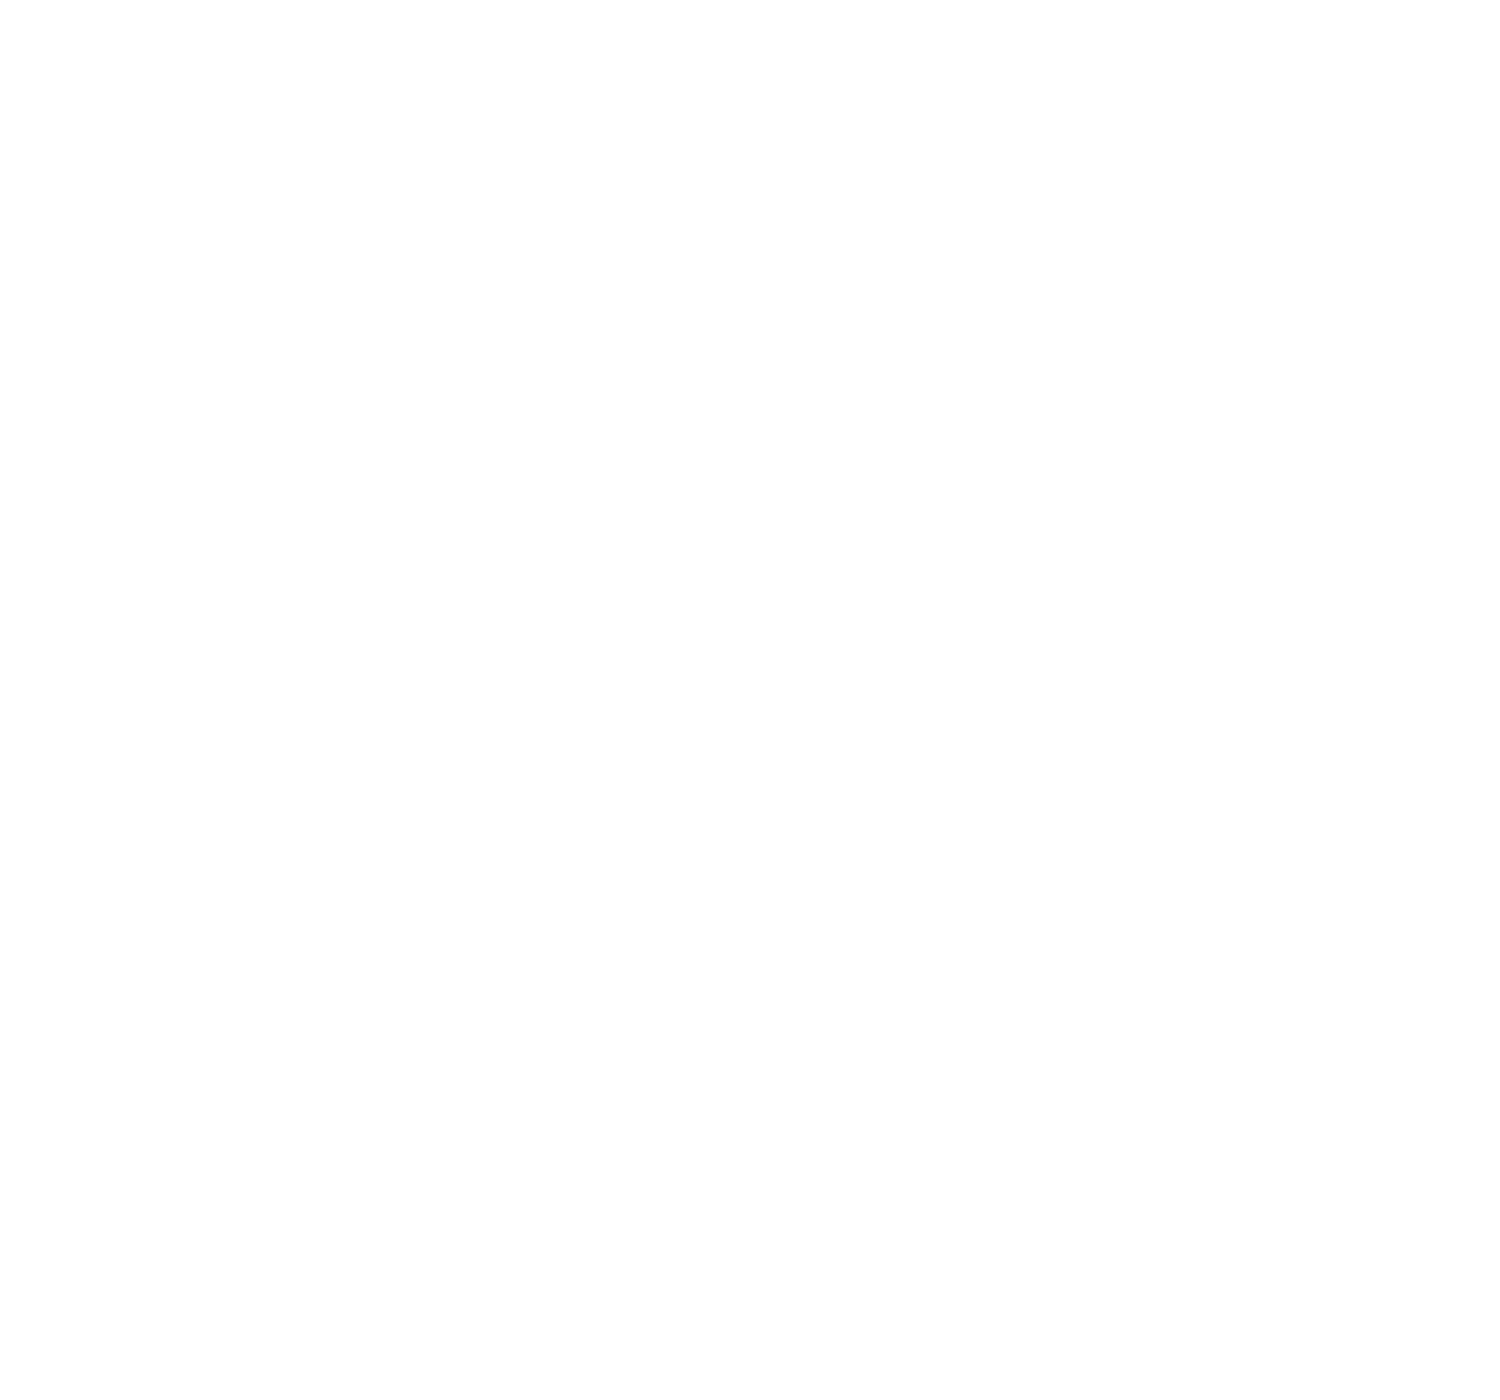 Graphic: CDW logo in white